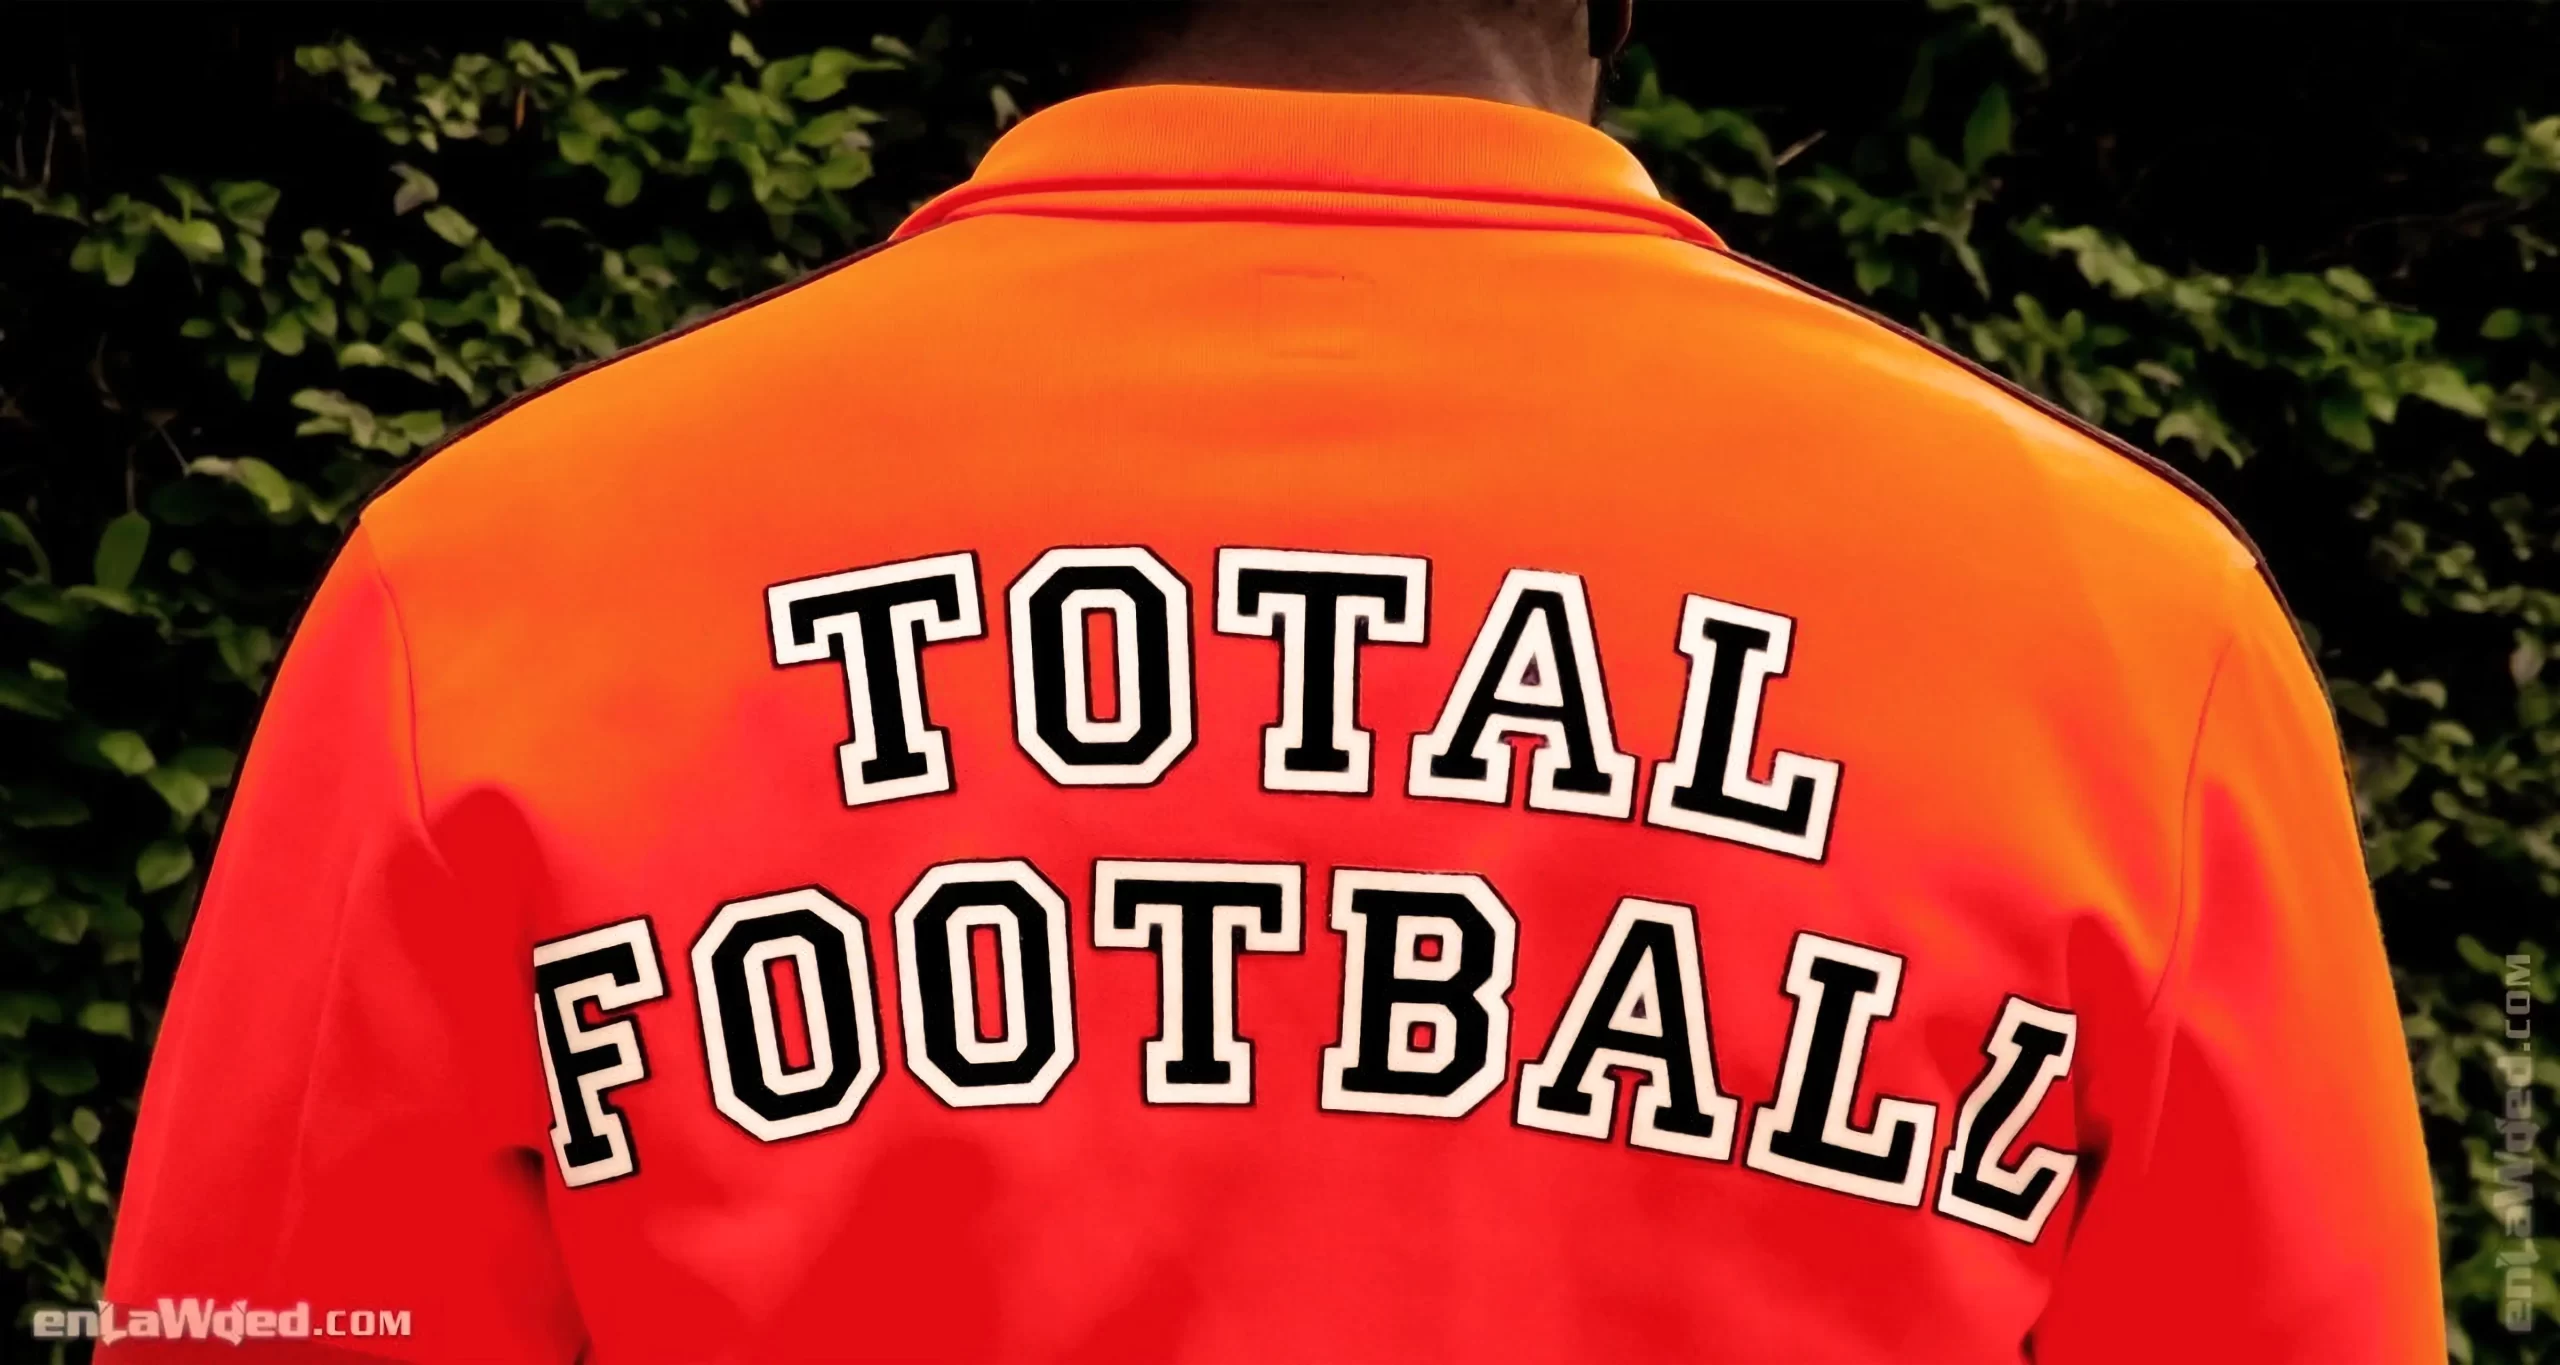 Men’s 2005 Netherlands ’74 Total Football TT by Adidas: Conscientious (EnLawded.com file #lmc47lyhcp89j87ebw)